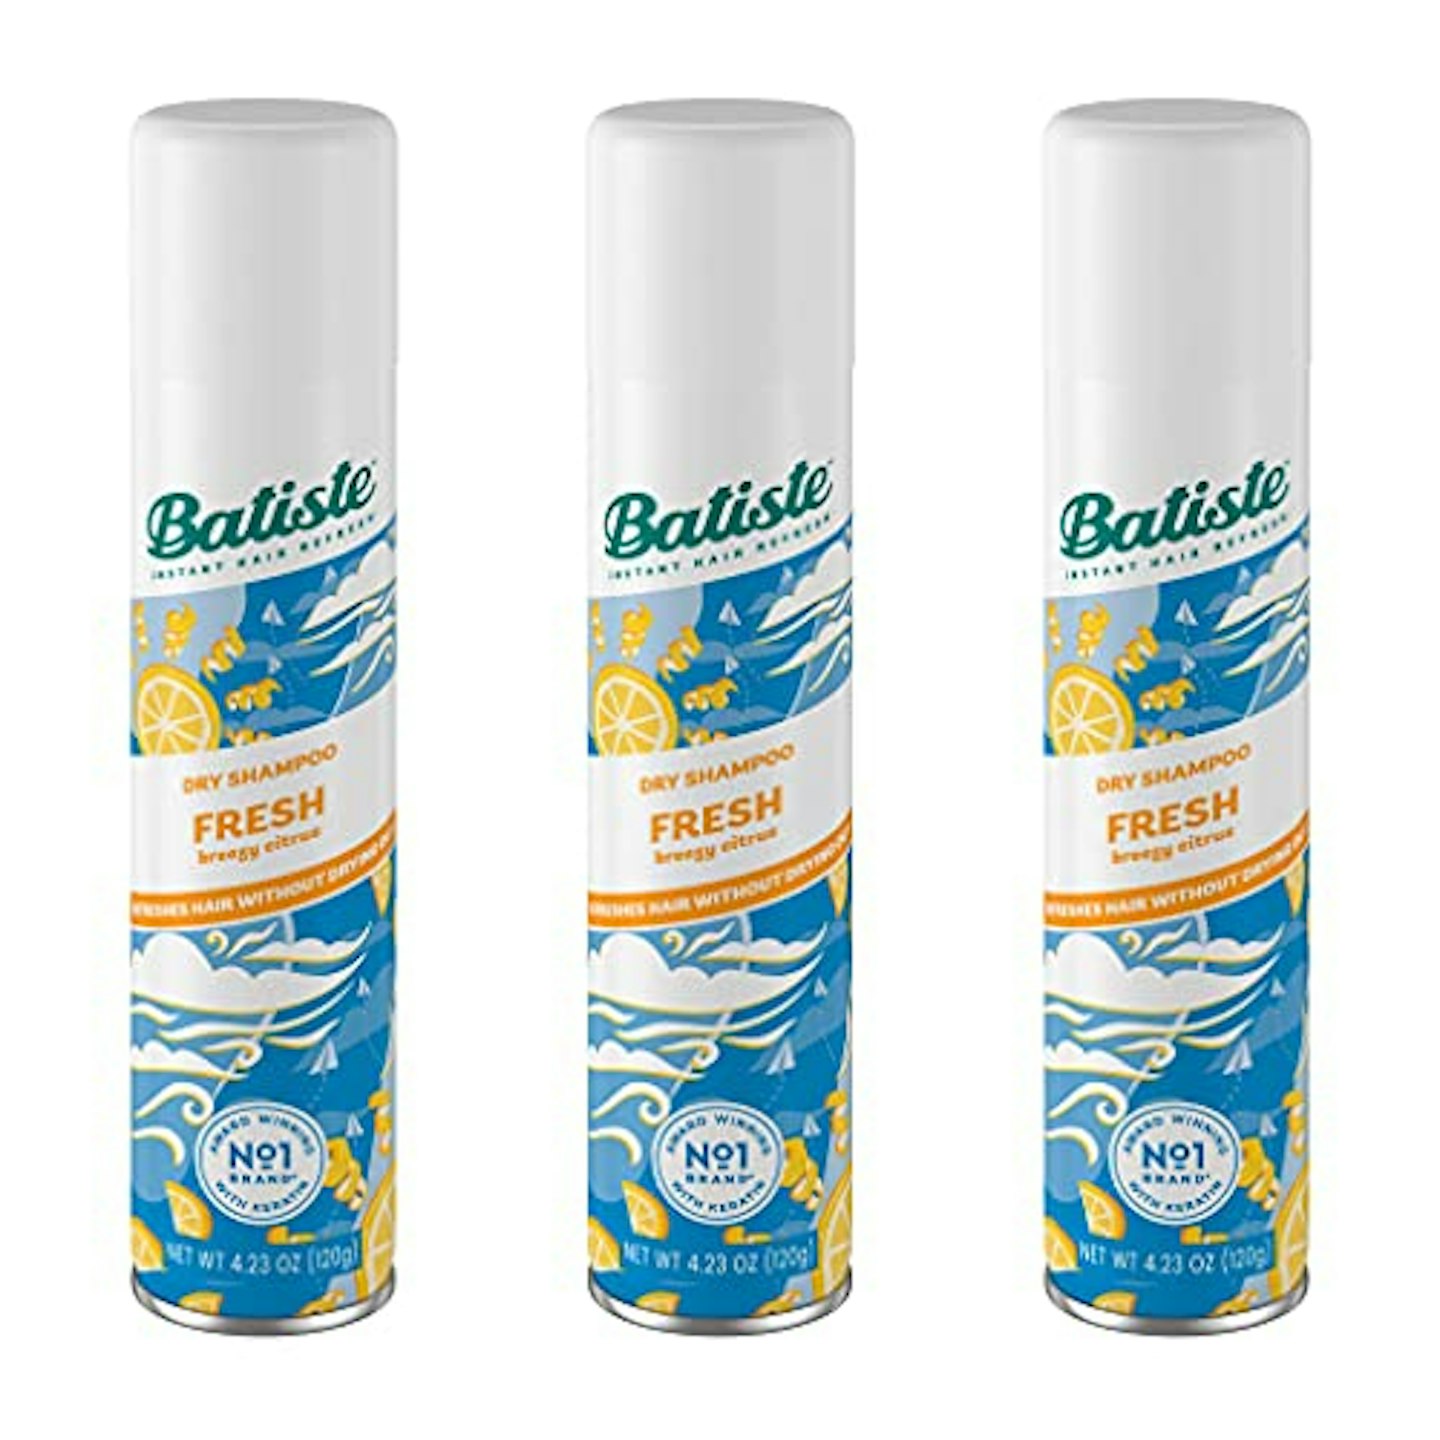 Batiste Shampoo Dry Fresh 3 pack